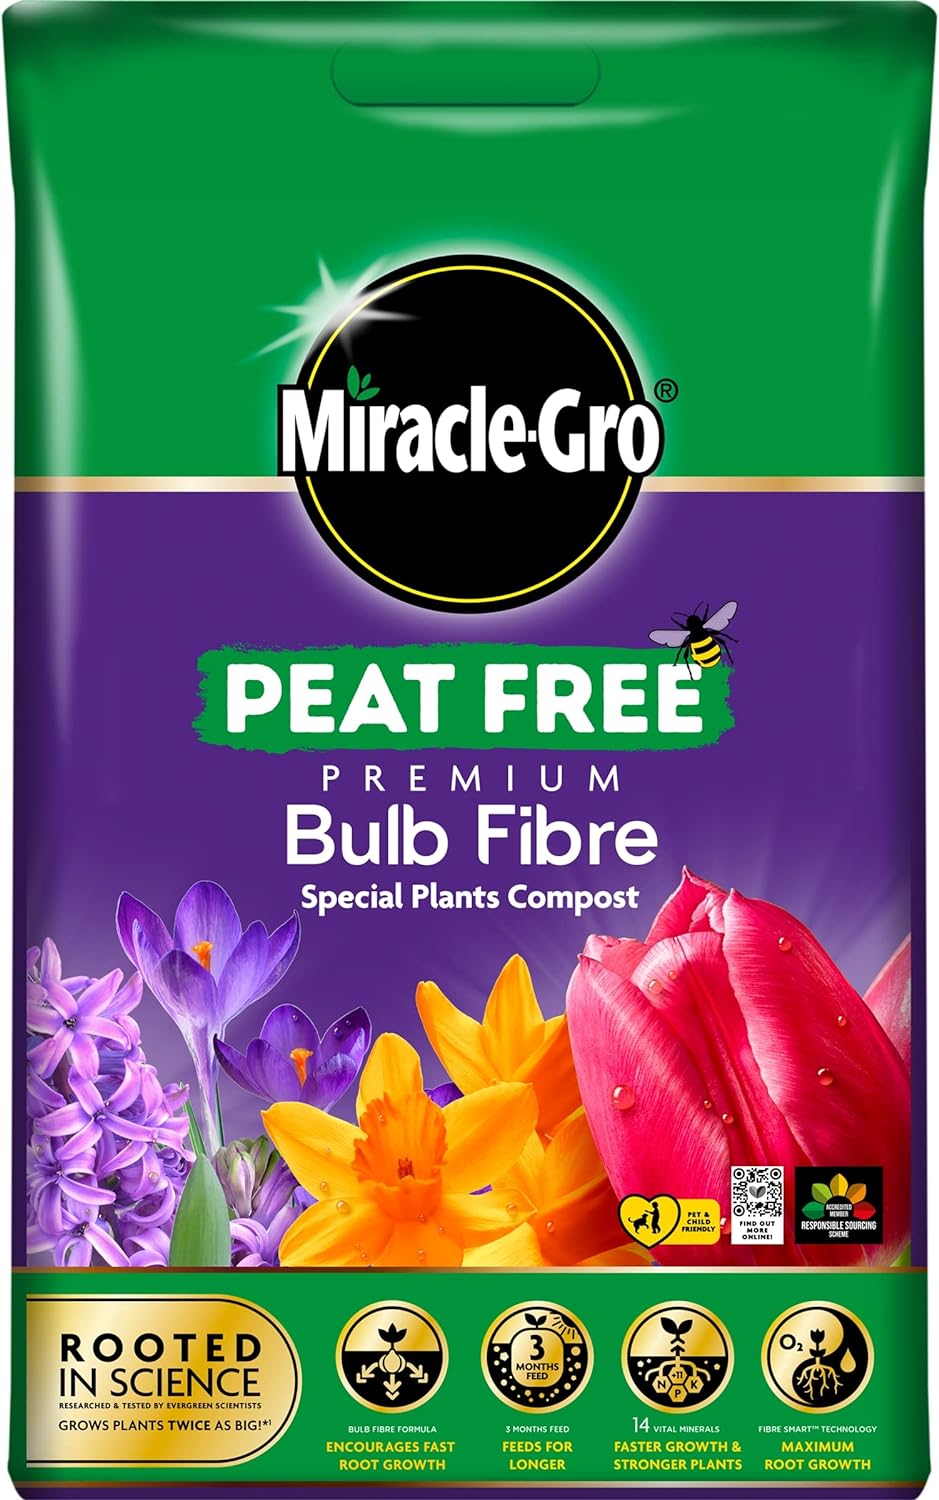 Miracle-Gro Bulb Fibre Premium Peat Free Compost